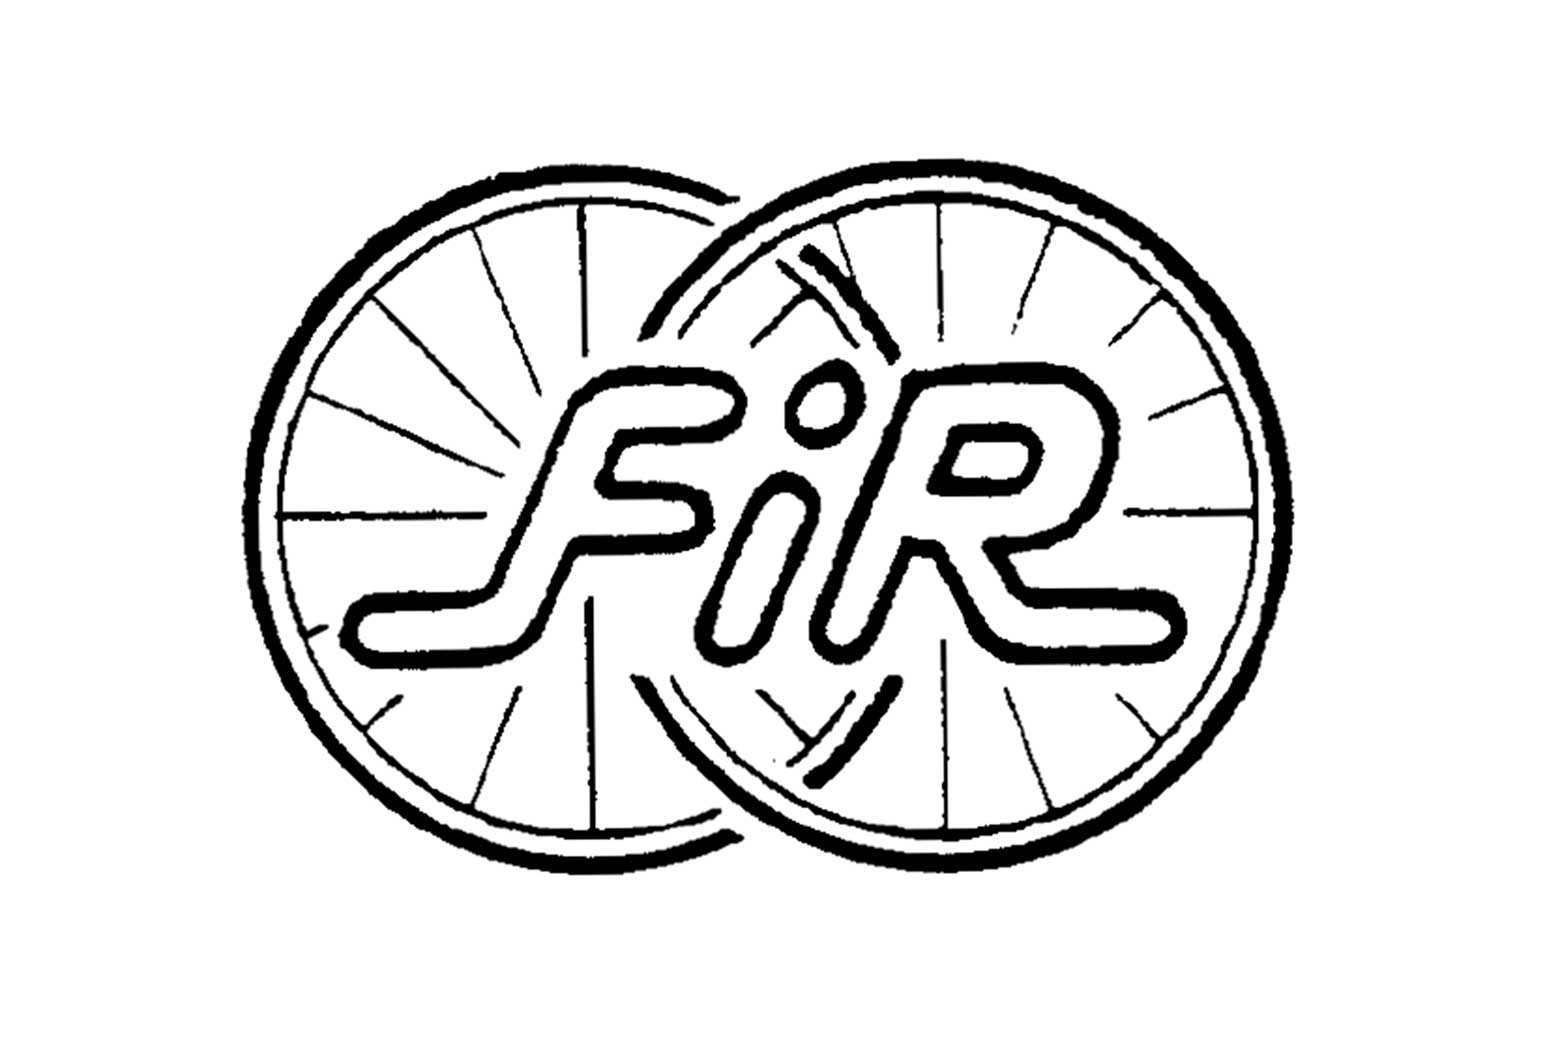 FIR logo 01 - main image